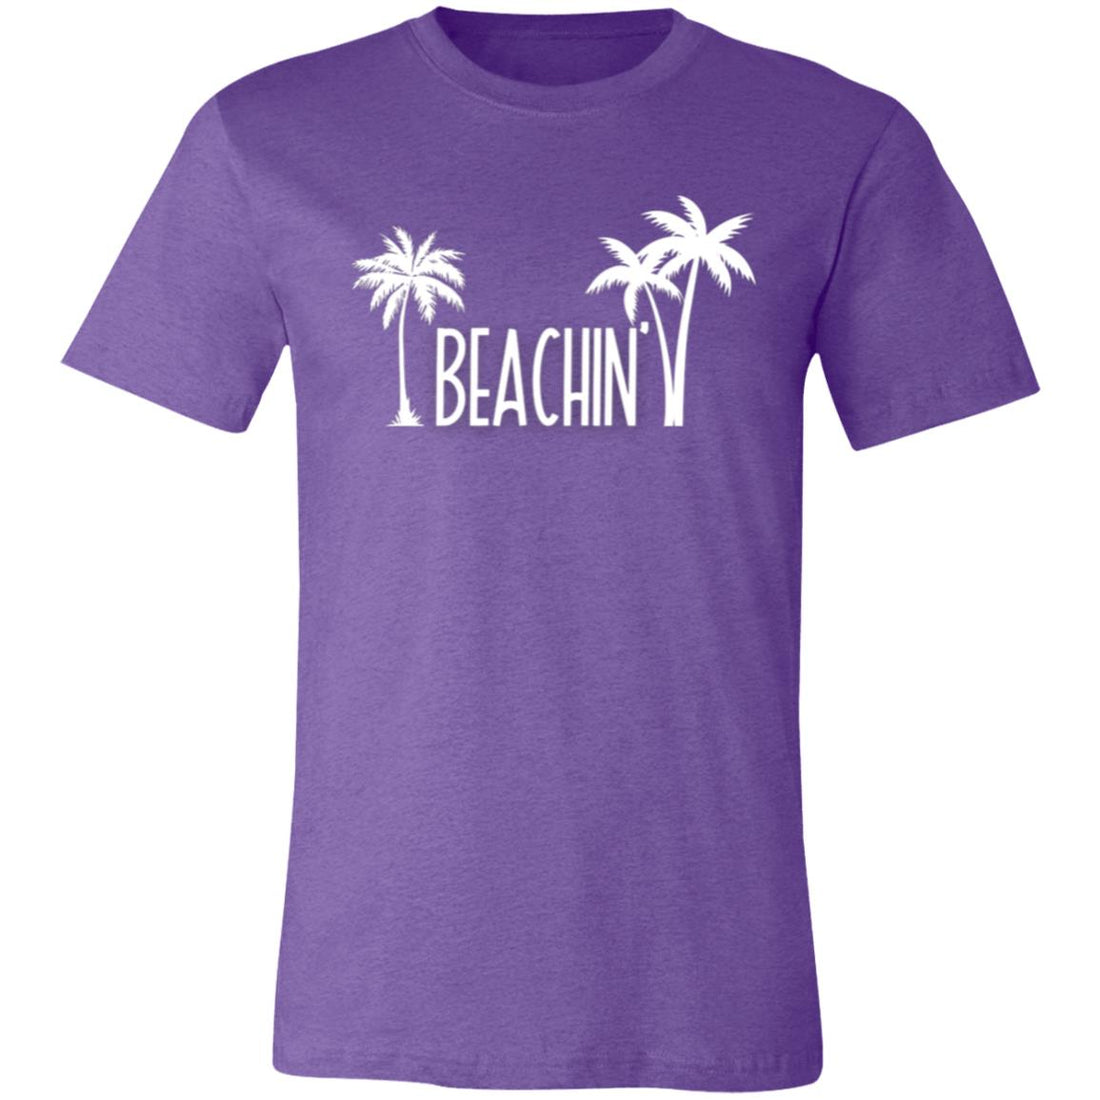 Beachin' T-Shirt - T-Shirts - Positively Sassy - Beachin' T-Shirt